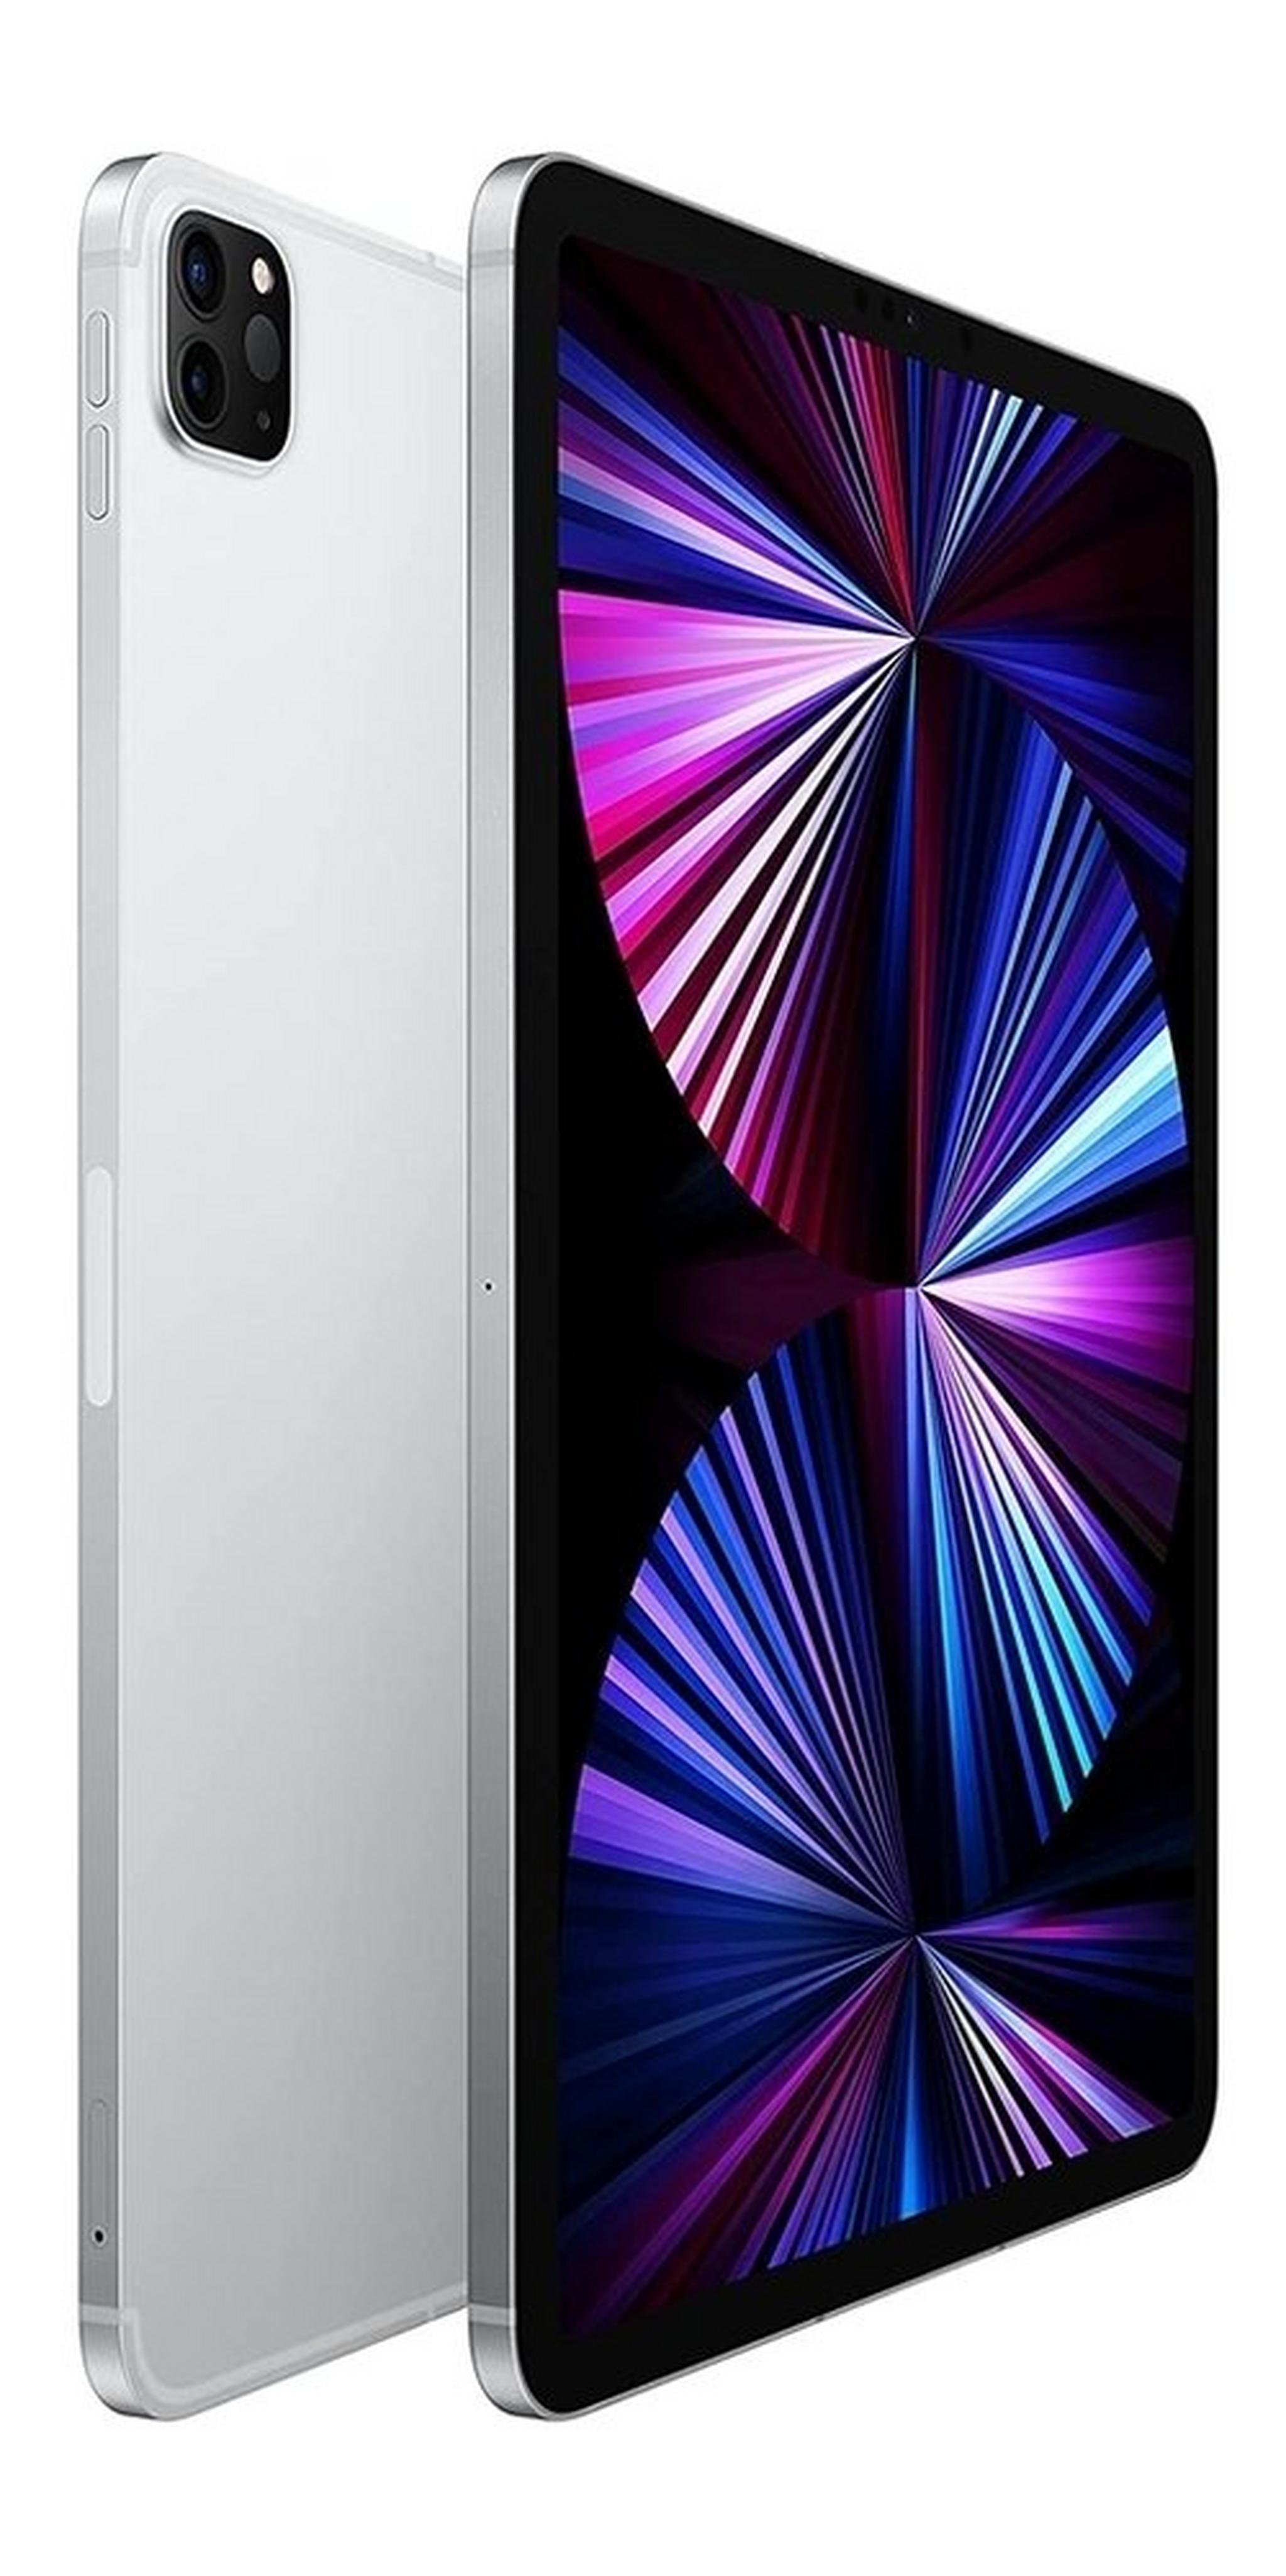 Apple iPad Pro 2021 M1 1TB Wifi 11-inch Tablet - Silver